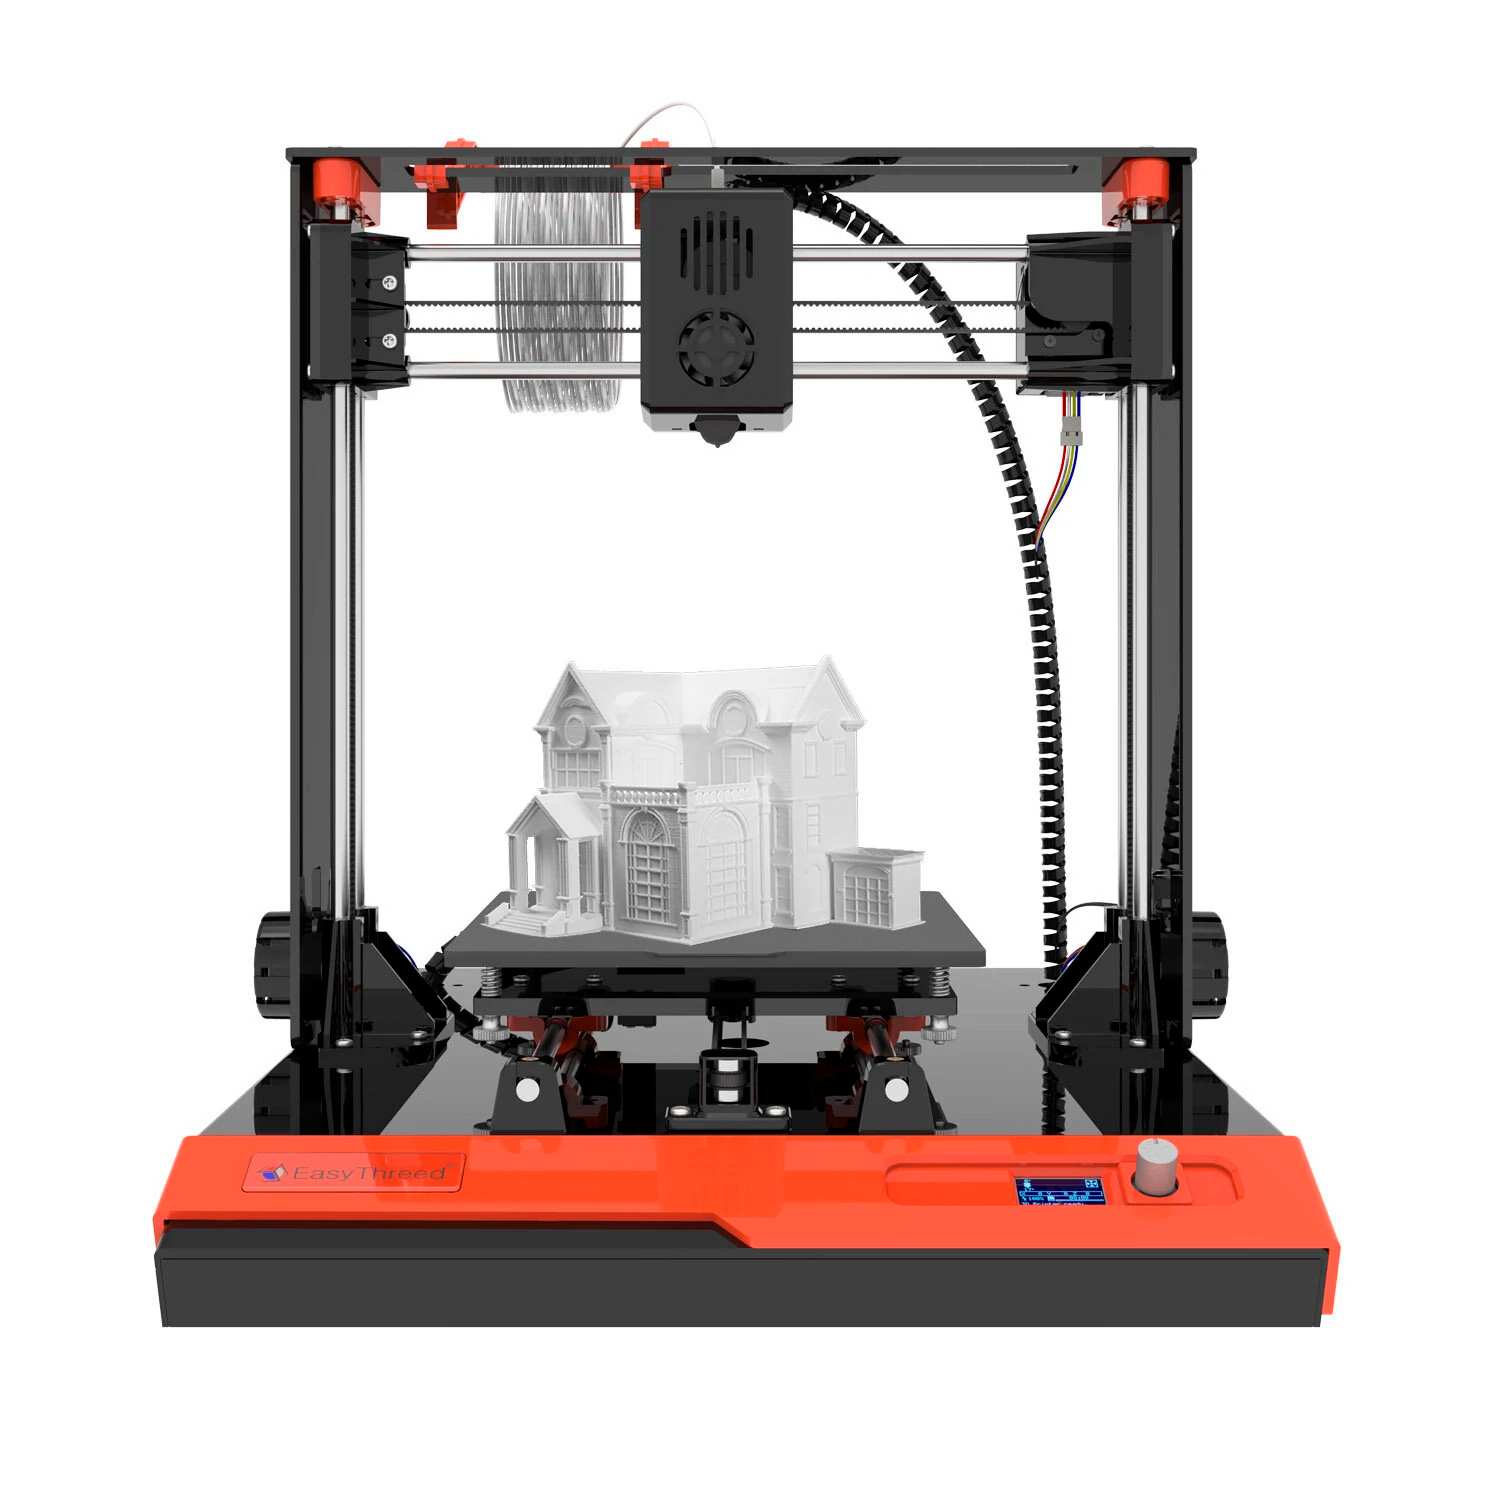 Easythreed K4 3D Printer Banggood Coupon Promo Code